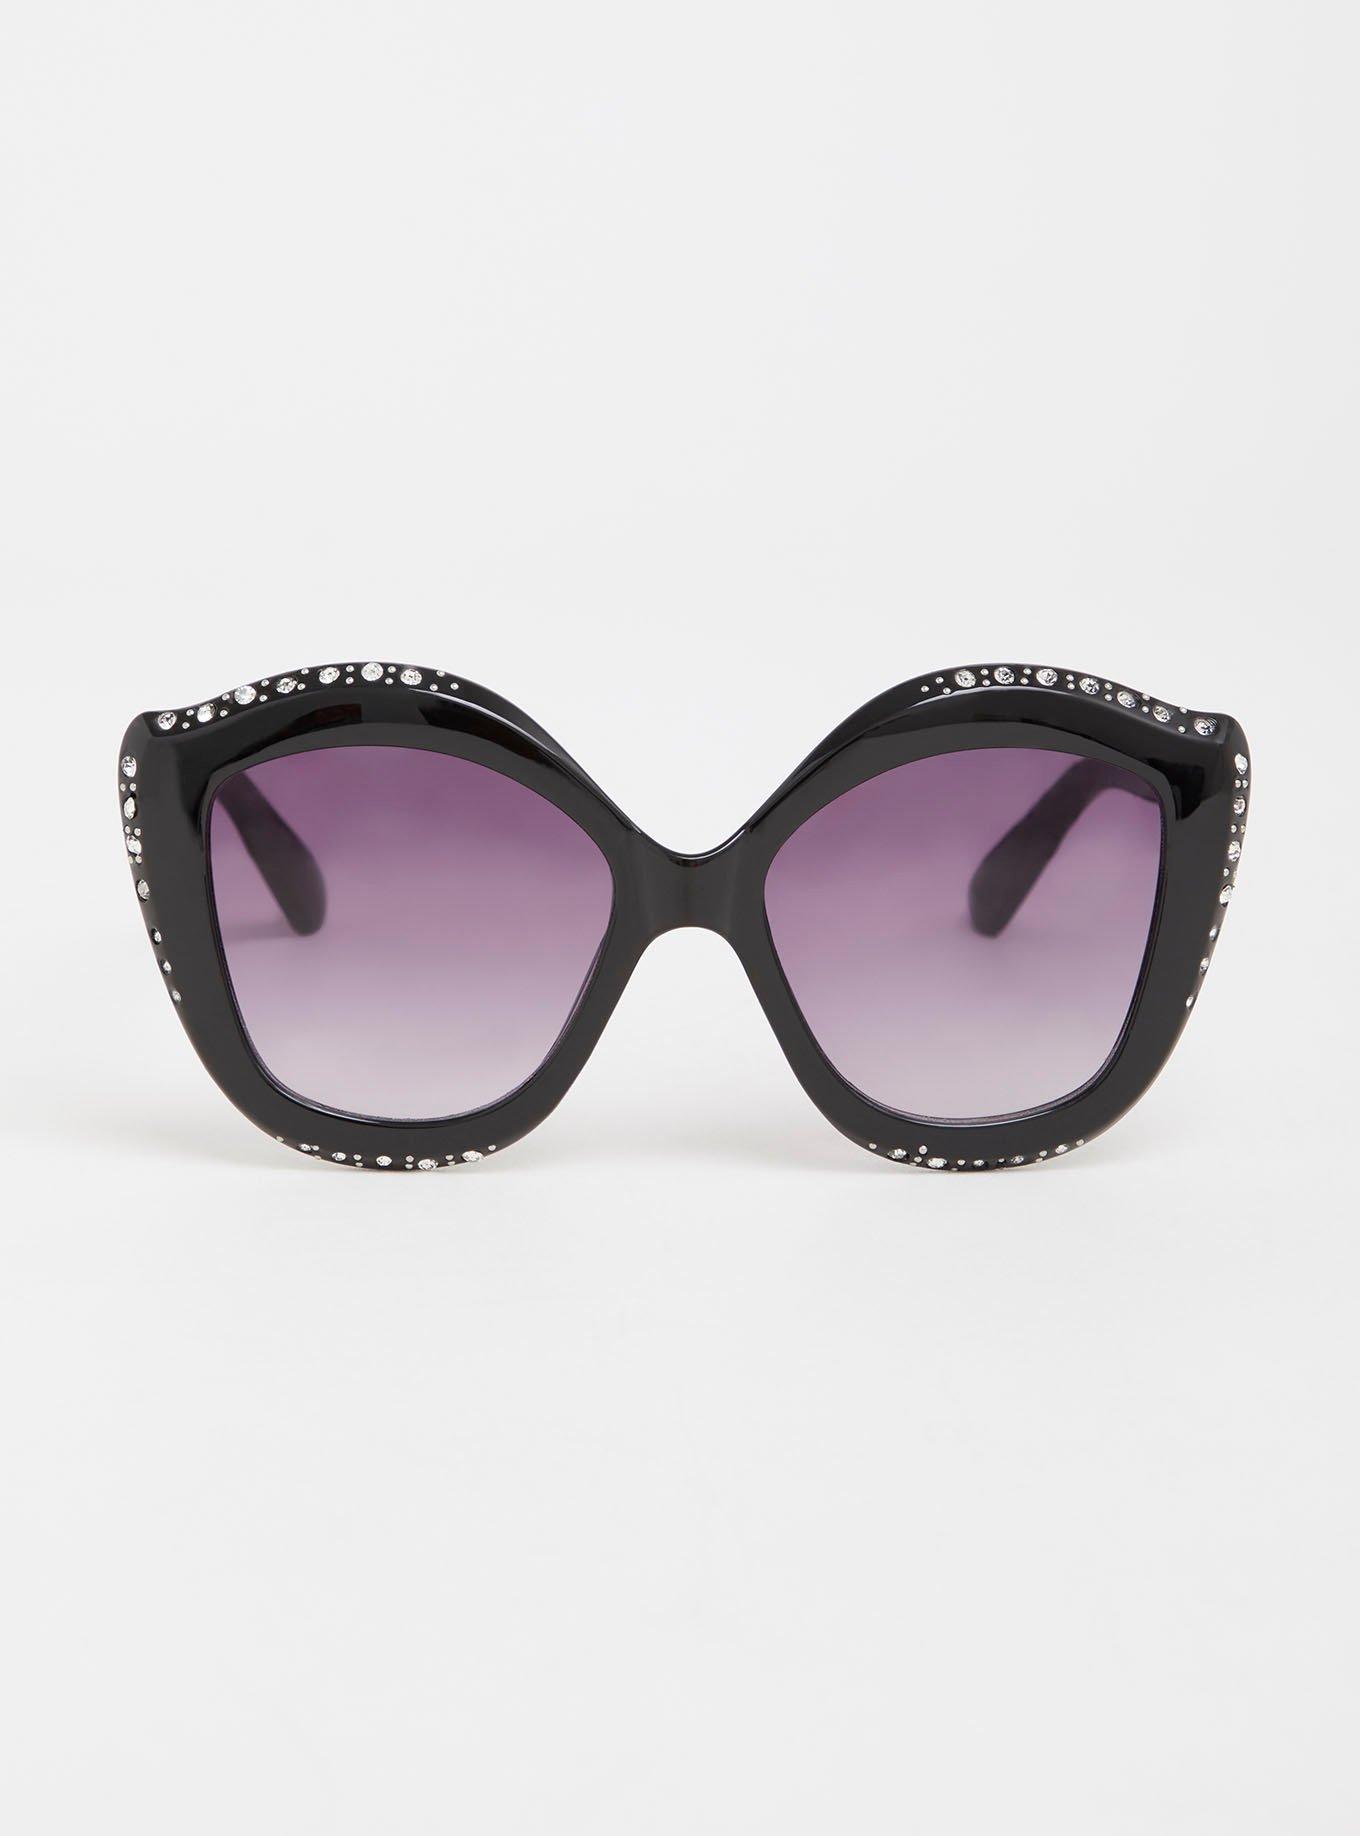 Plus Size - Black Rhinestone Oversized Sunglasses - Torrid